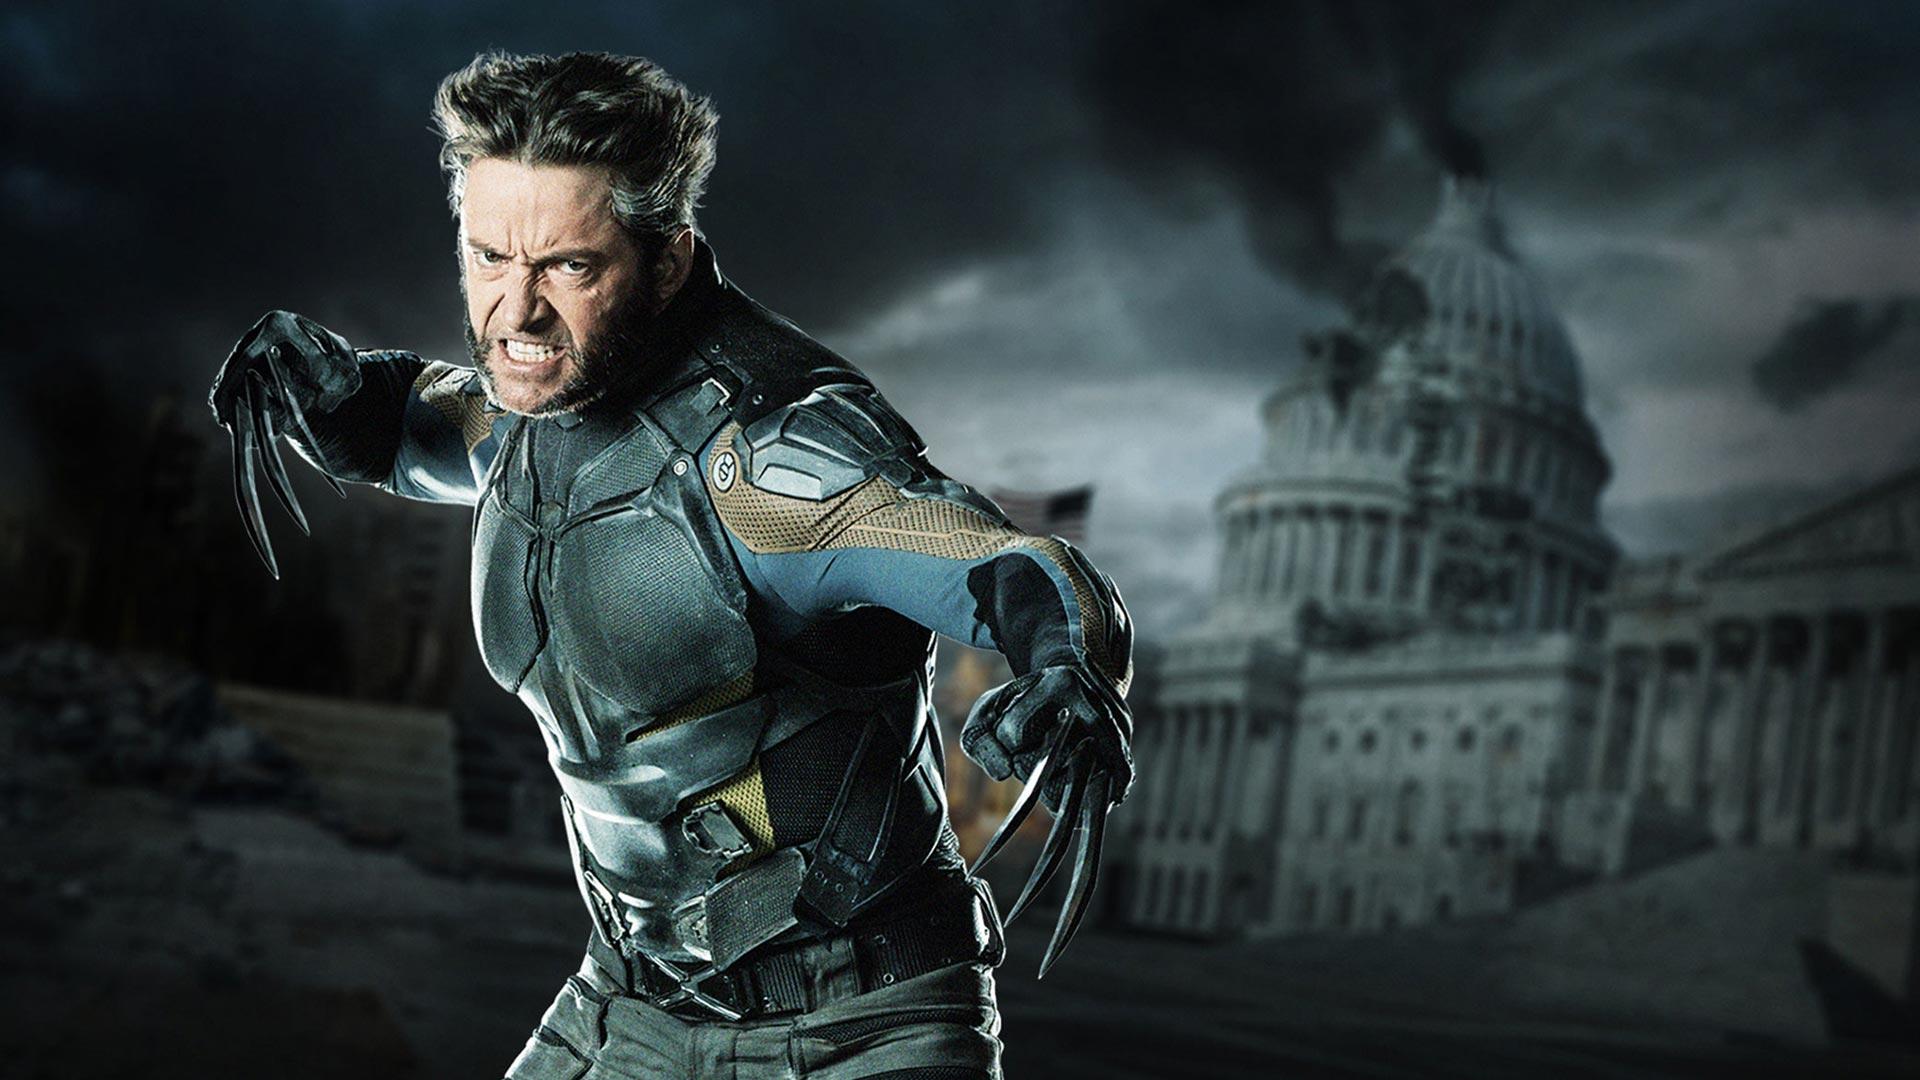 X Men: Days Of Future Past Movie 2014 HD, IPad & IPhone Wallpaper